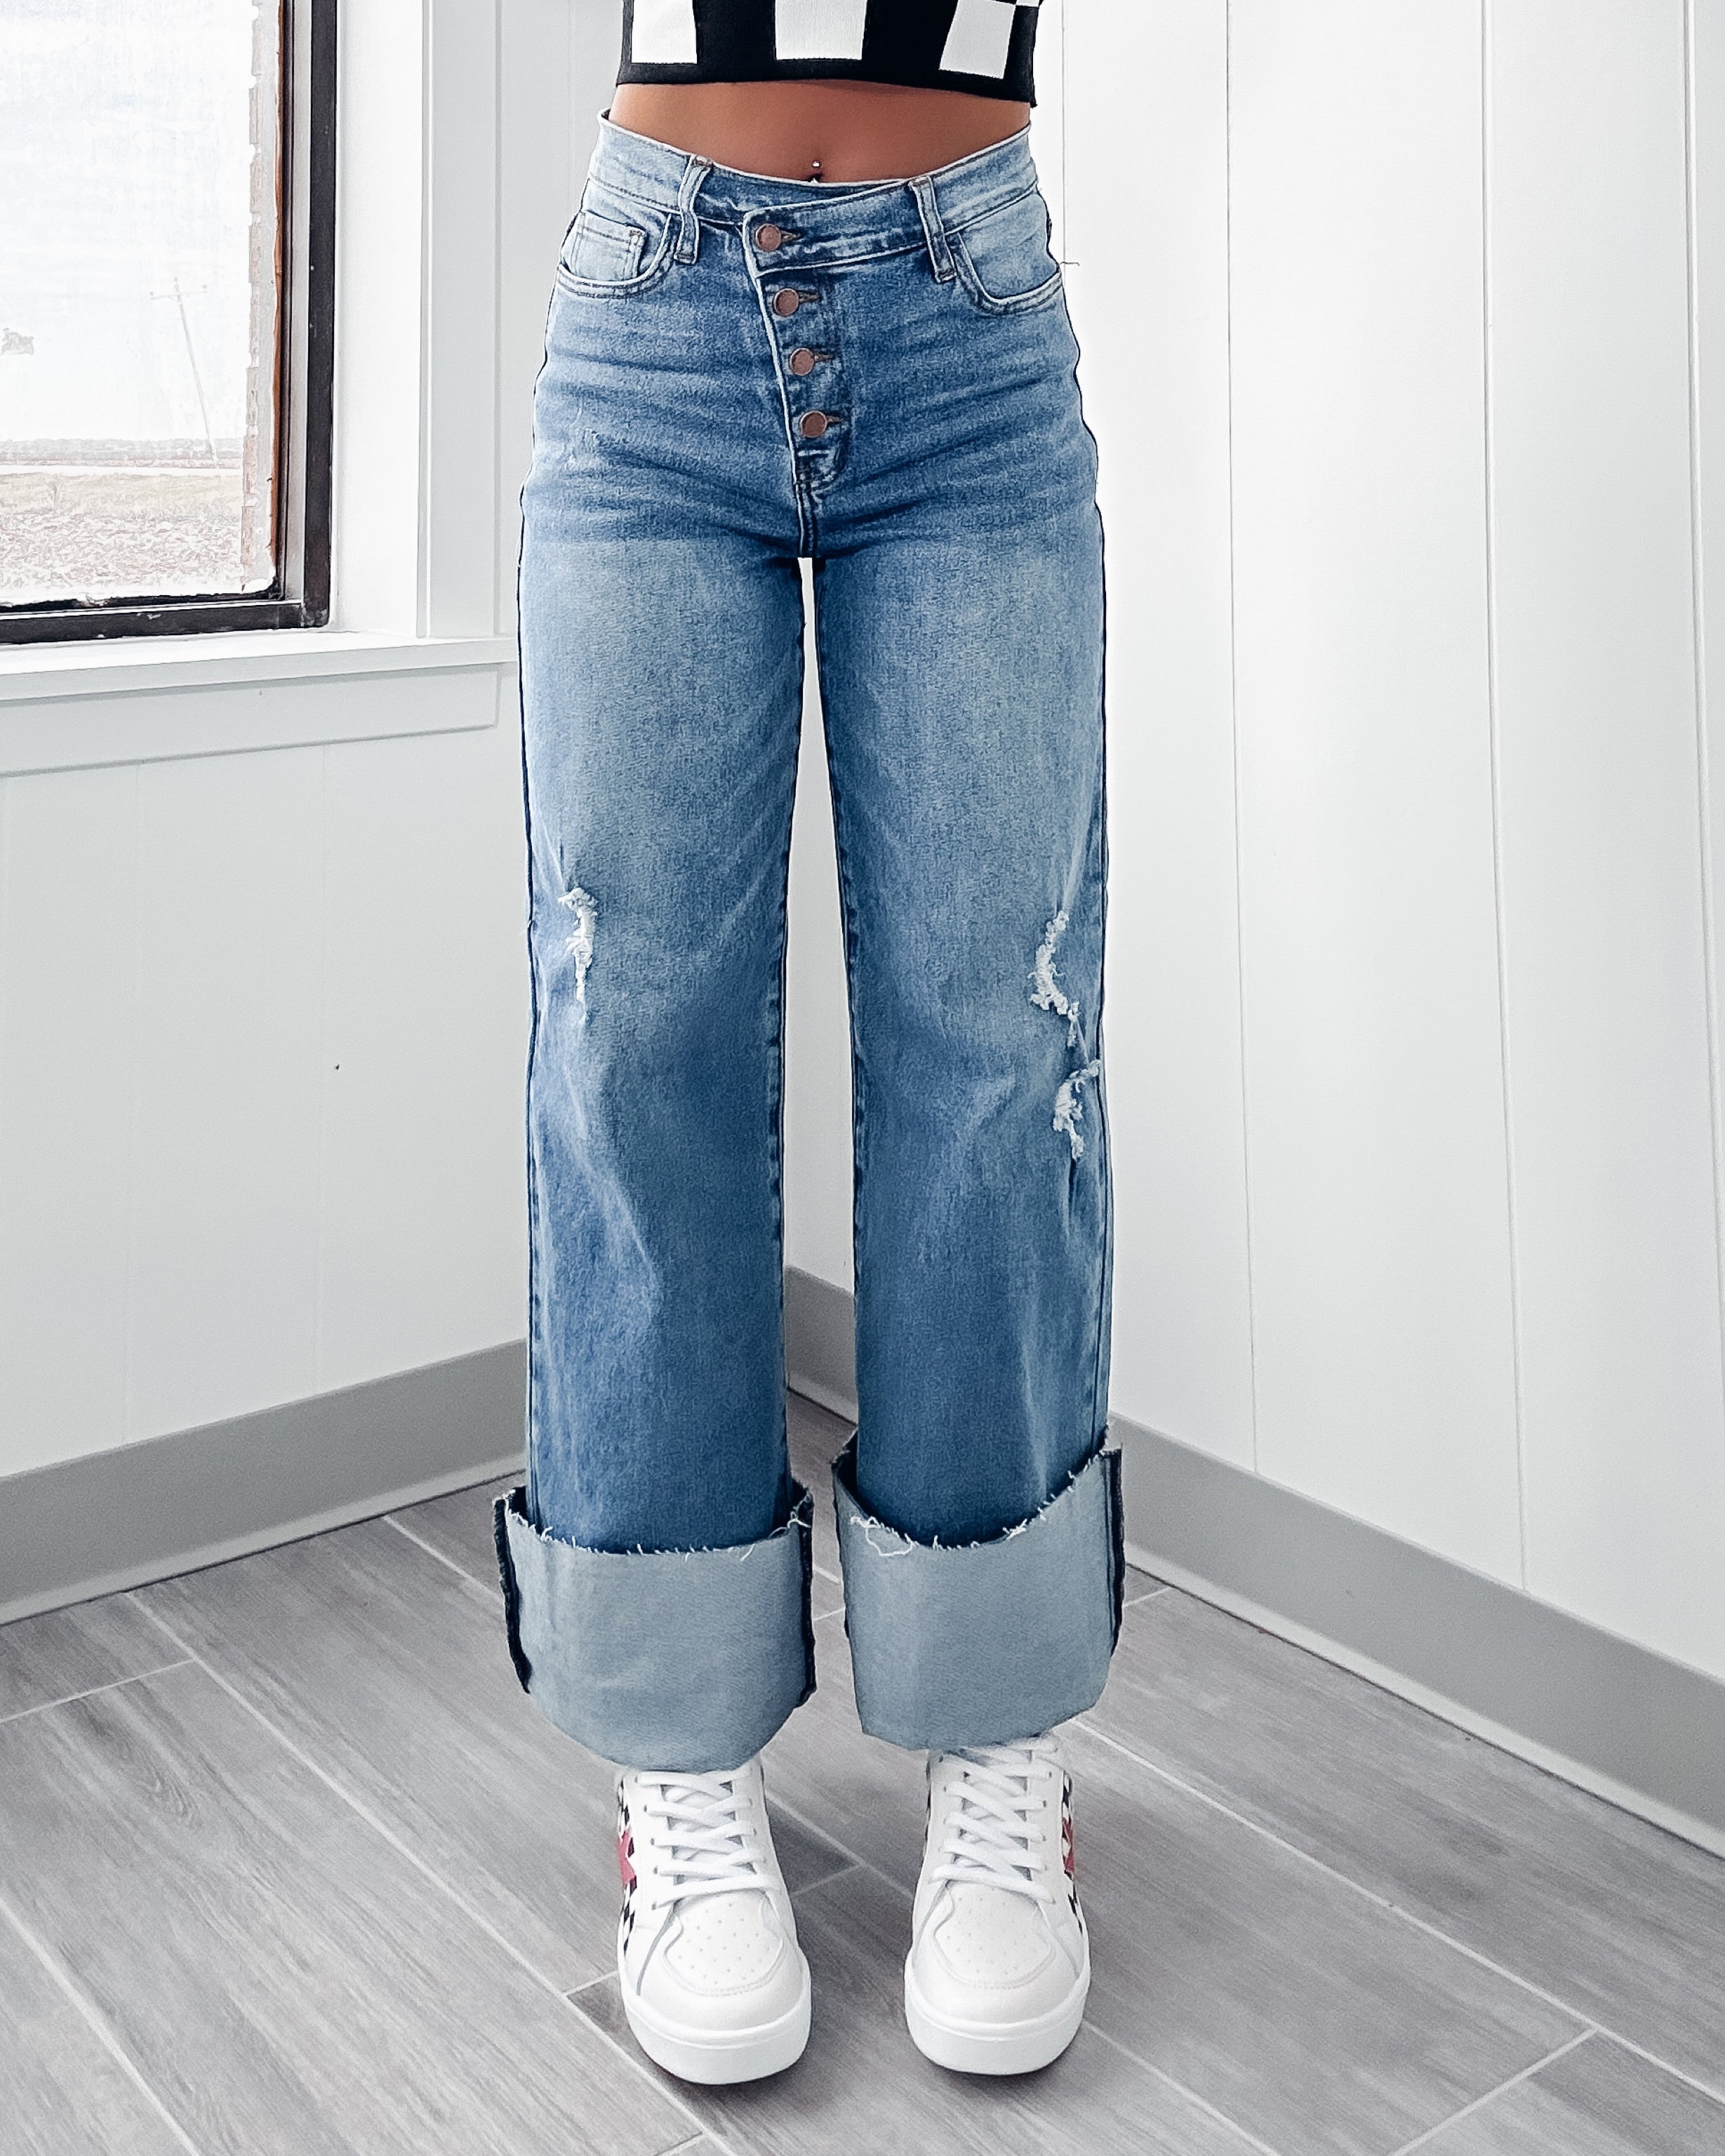 Addison Cross Over Button Jeans- Medium Wash